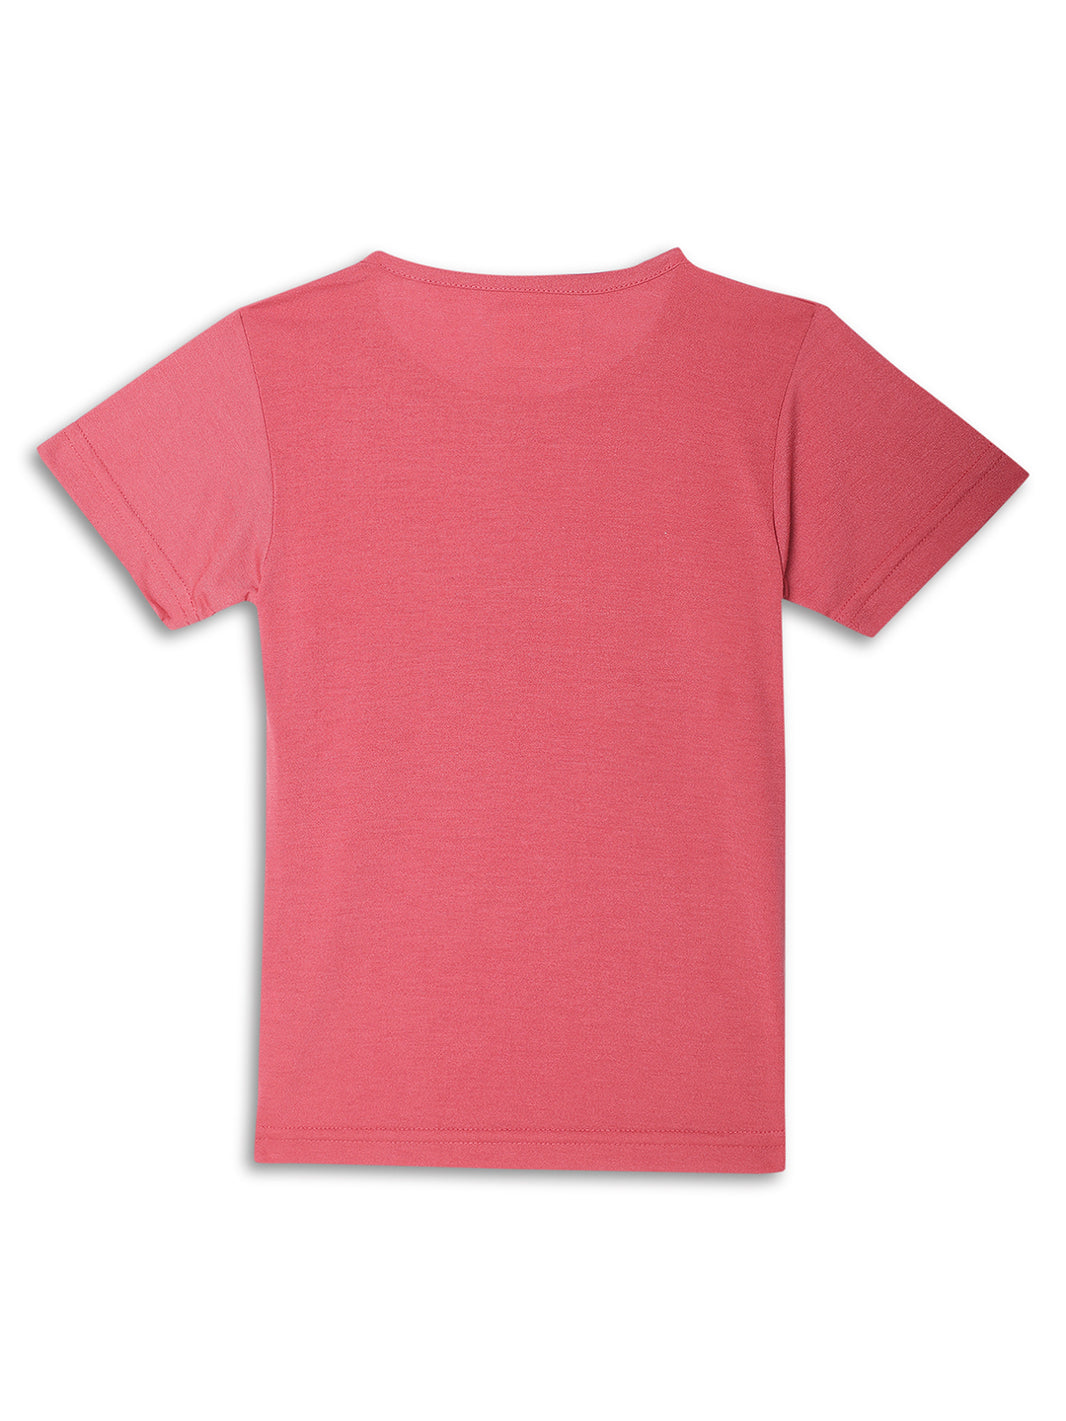 Vimal Jonney Printed  Pink  Regular Fit Cotton blended T-shirts For Kids